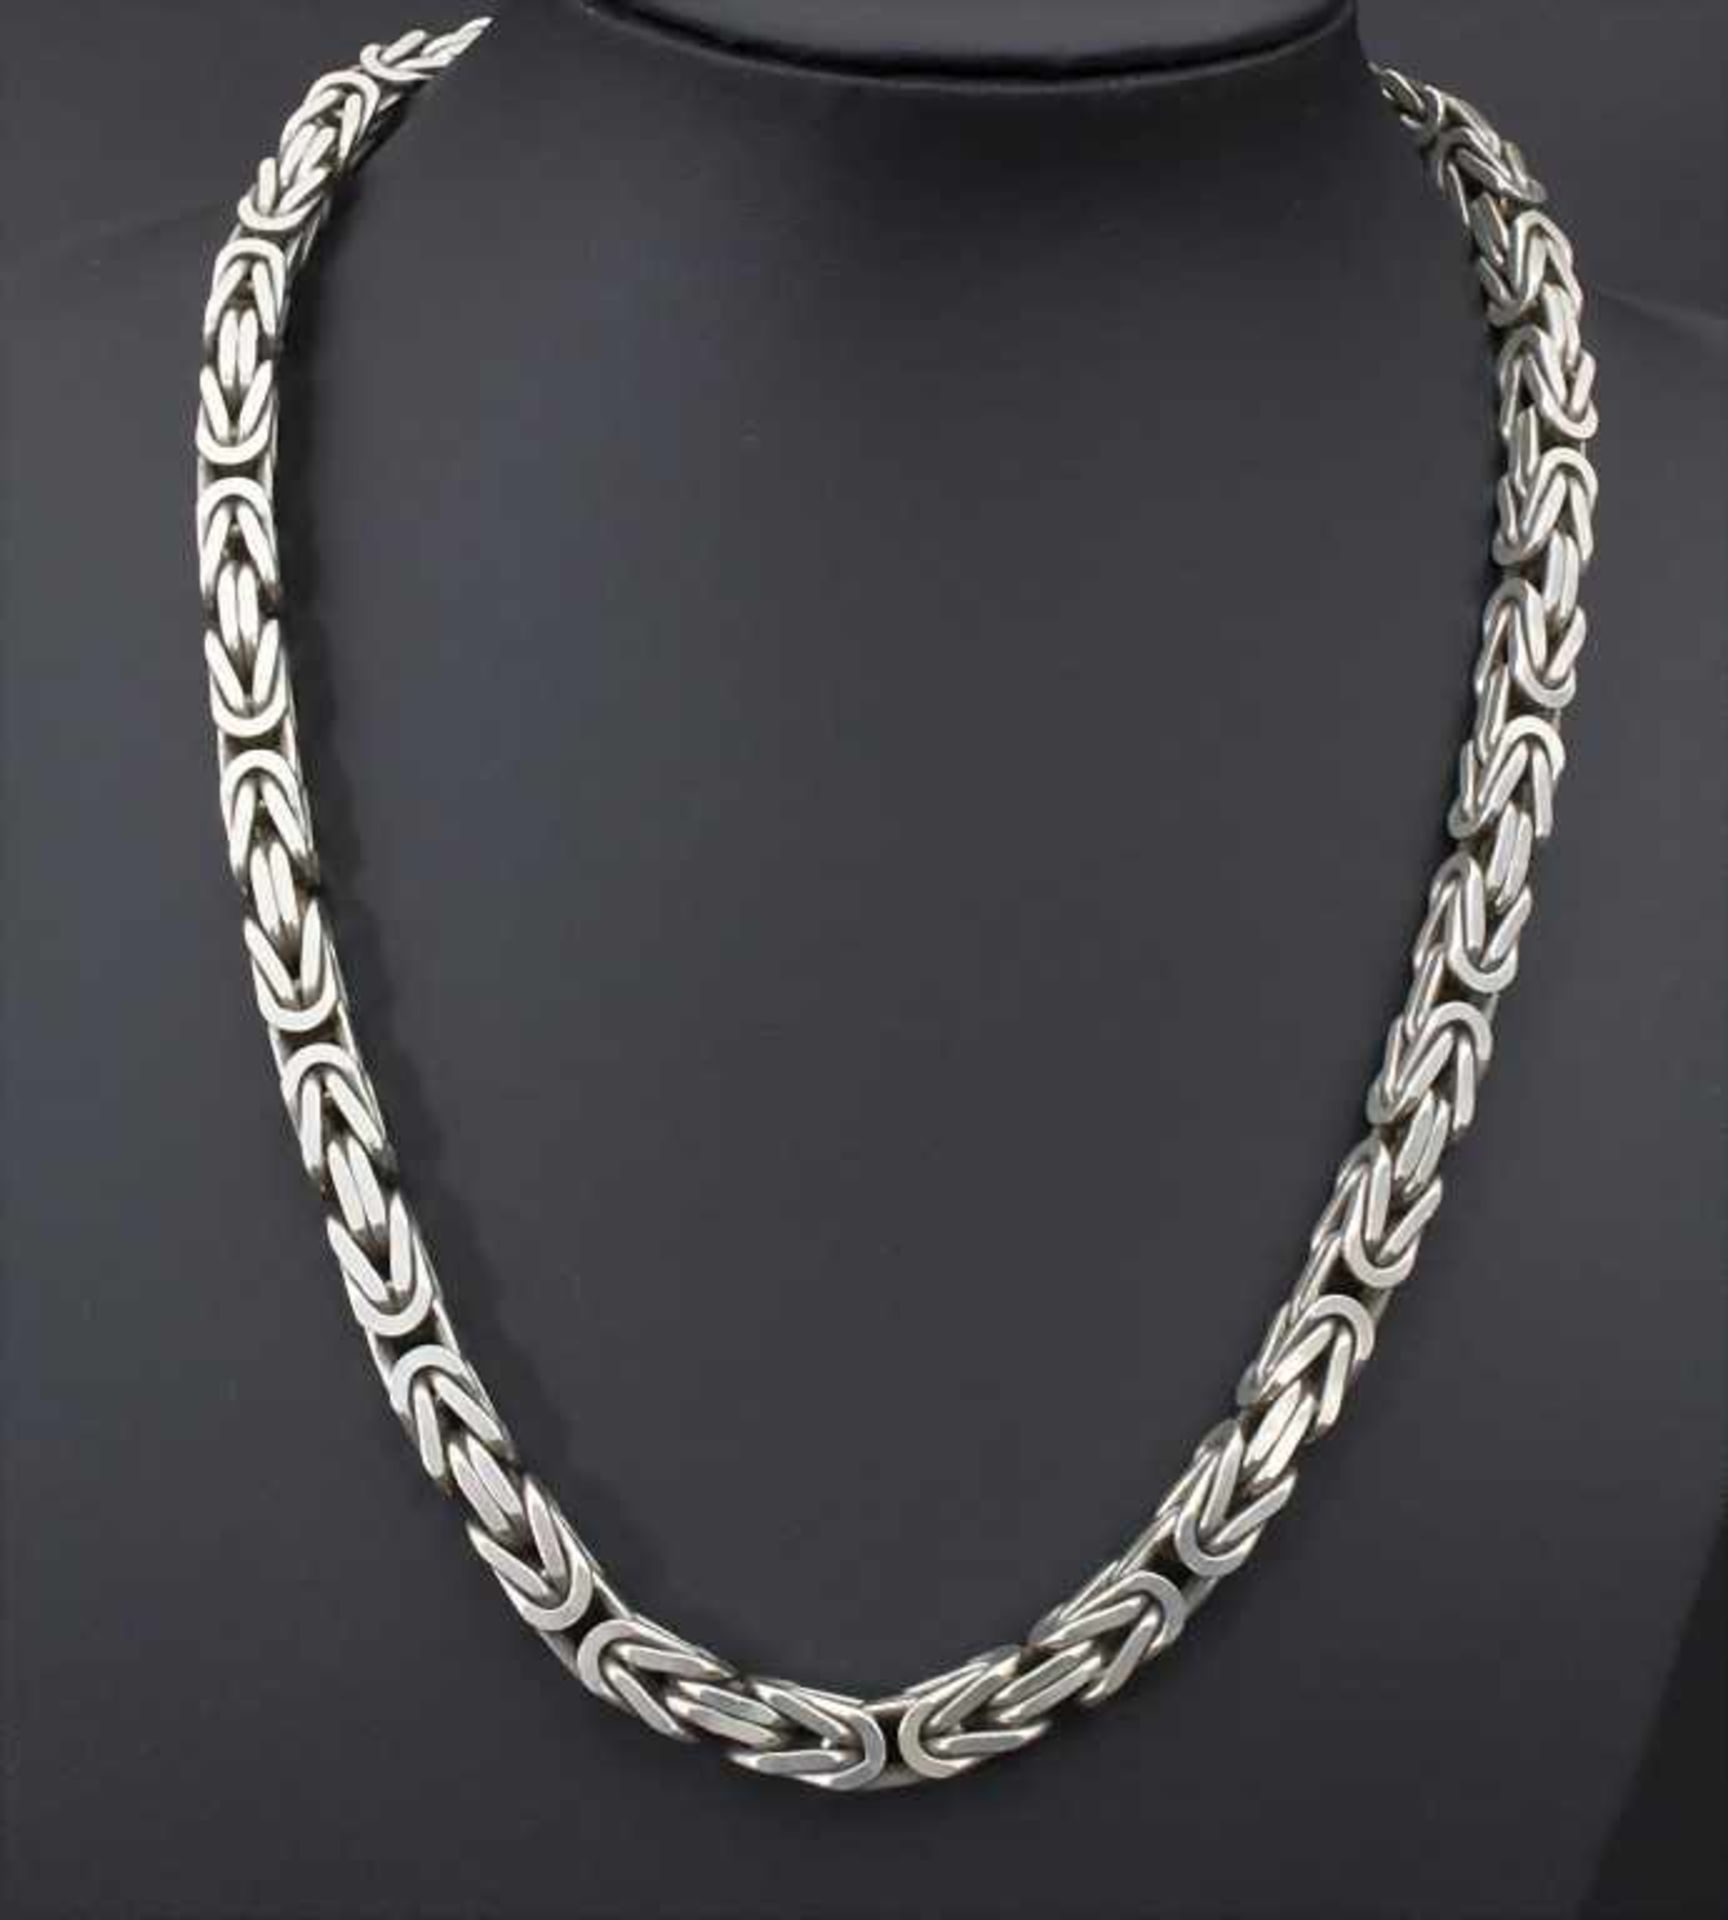 Königskette in Silber / A necklace in sterling